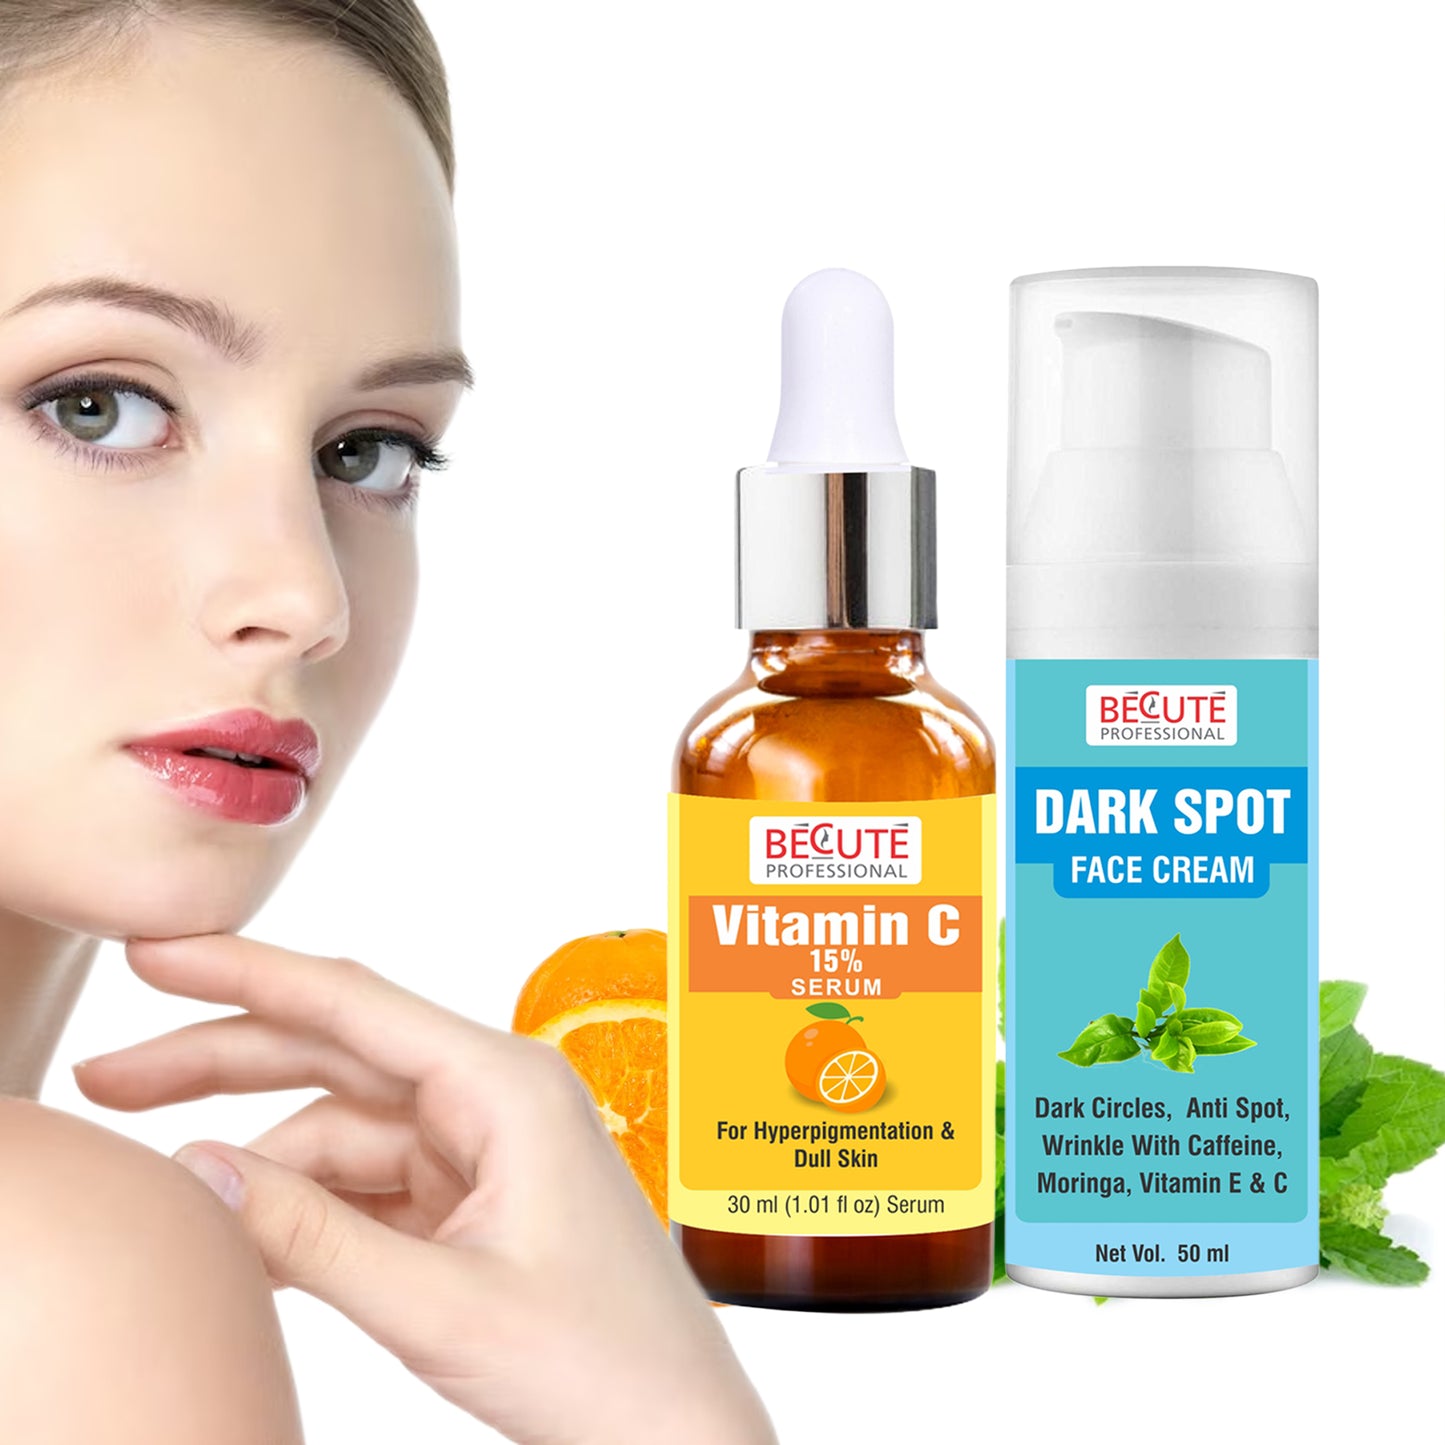 BECUTE Professional® Vitamin C Face Serum+Dark Spot Face Cream - Combo Pack, 80 mL